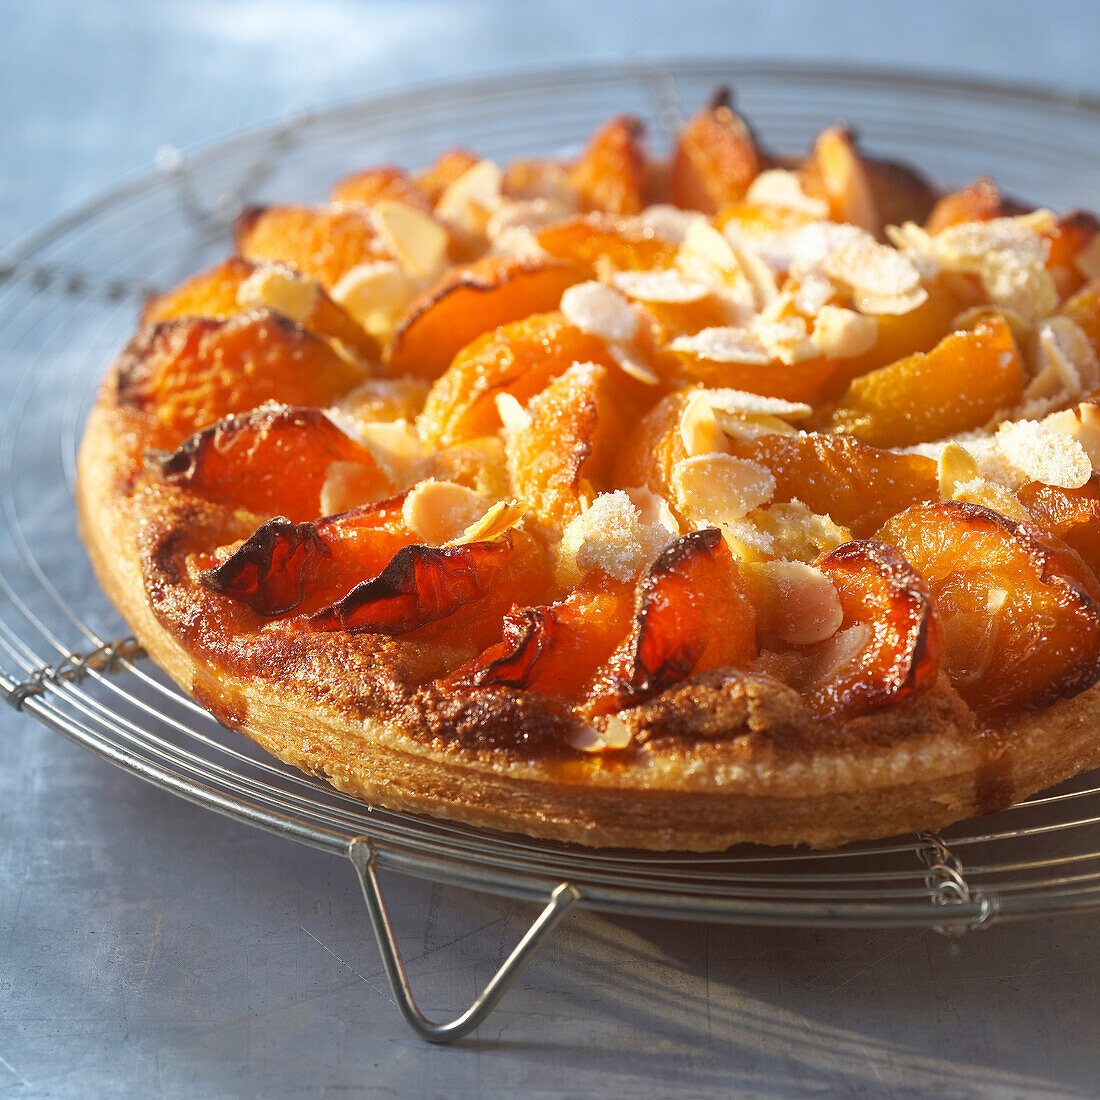 Apricot and almond tart